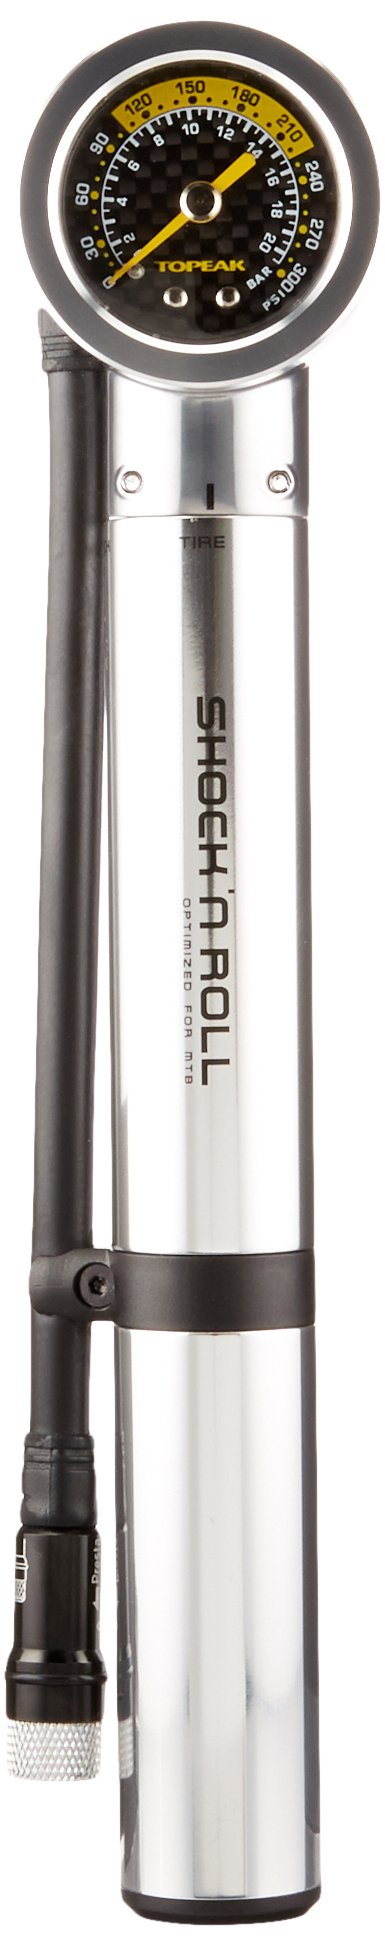 Topeak Shock N Roll Hand-Shock Pump with Gauge (Steel, 9.8 x 1.9 x 1.5-Inch) - RACKTRENDZ